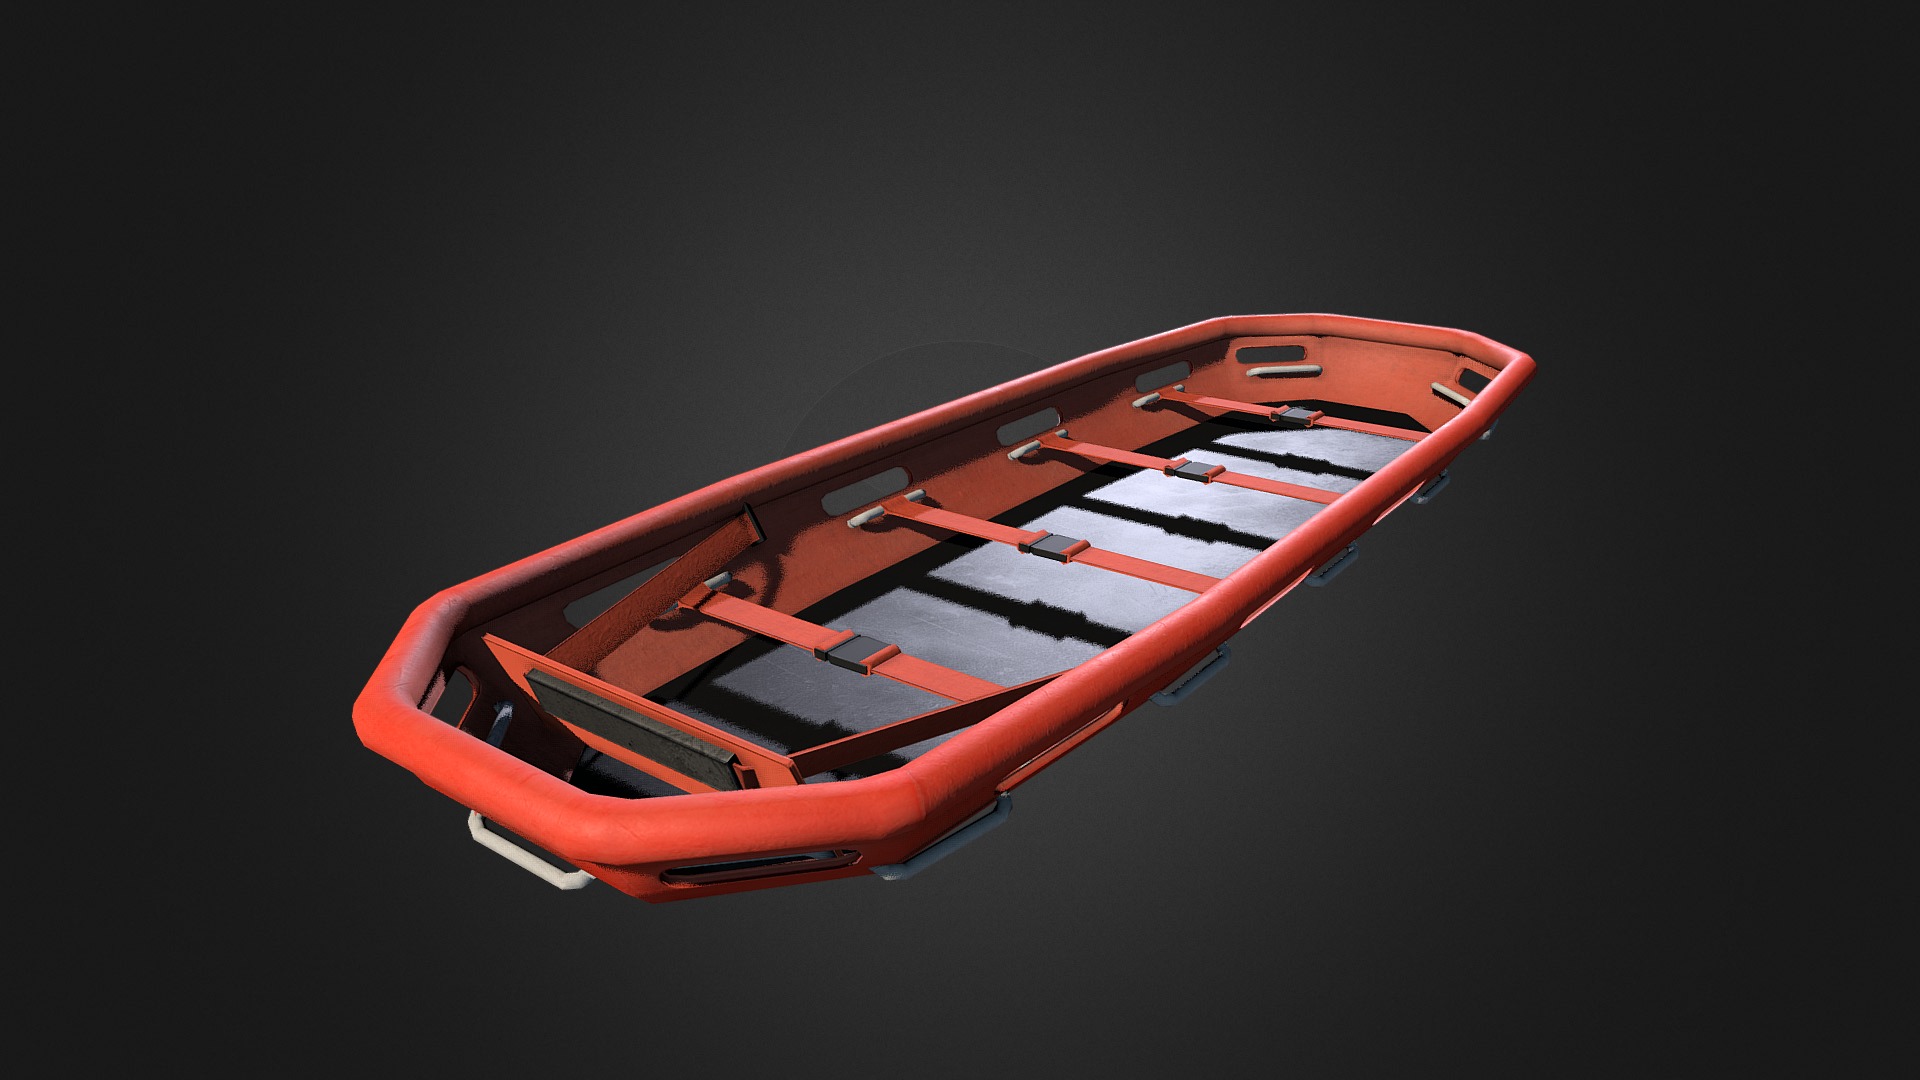 3D model Basket Stretcher - This is a 3D model of the Basket Stretcher. The 3D model is about a red and black boat.